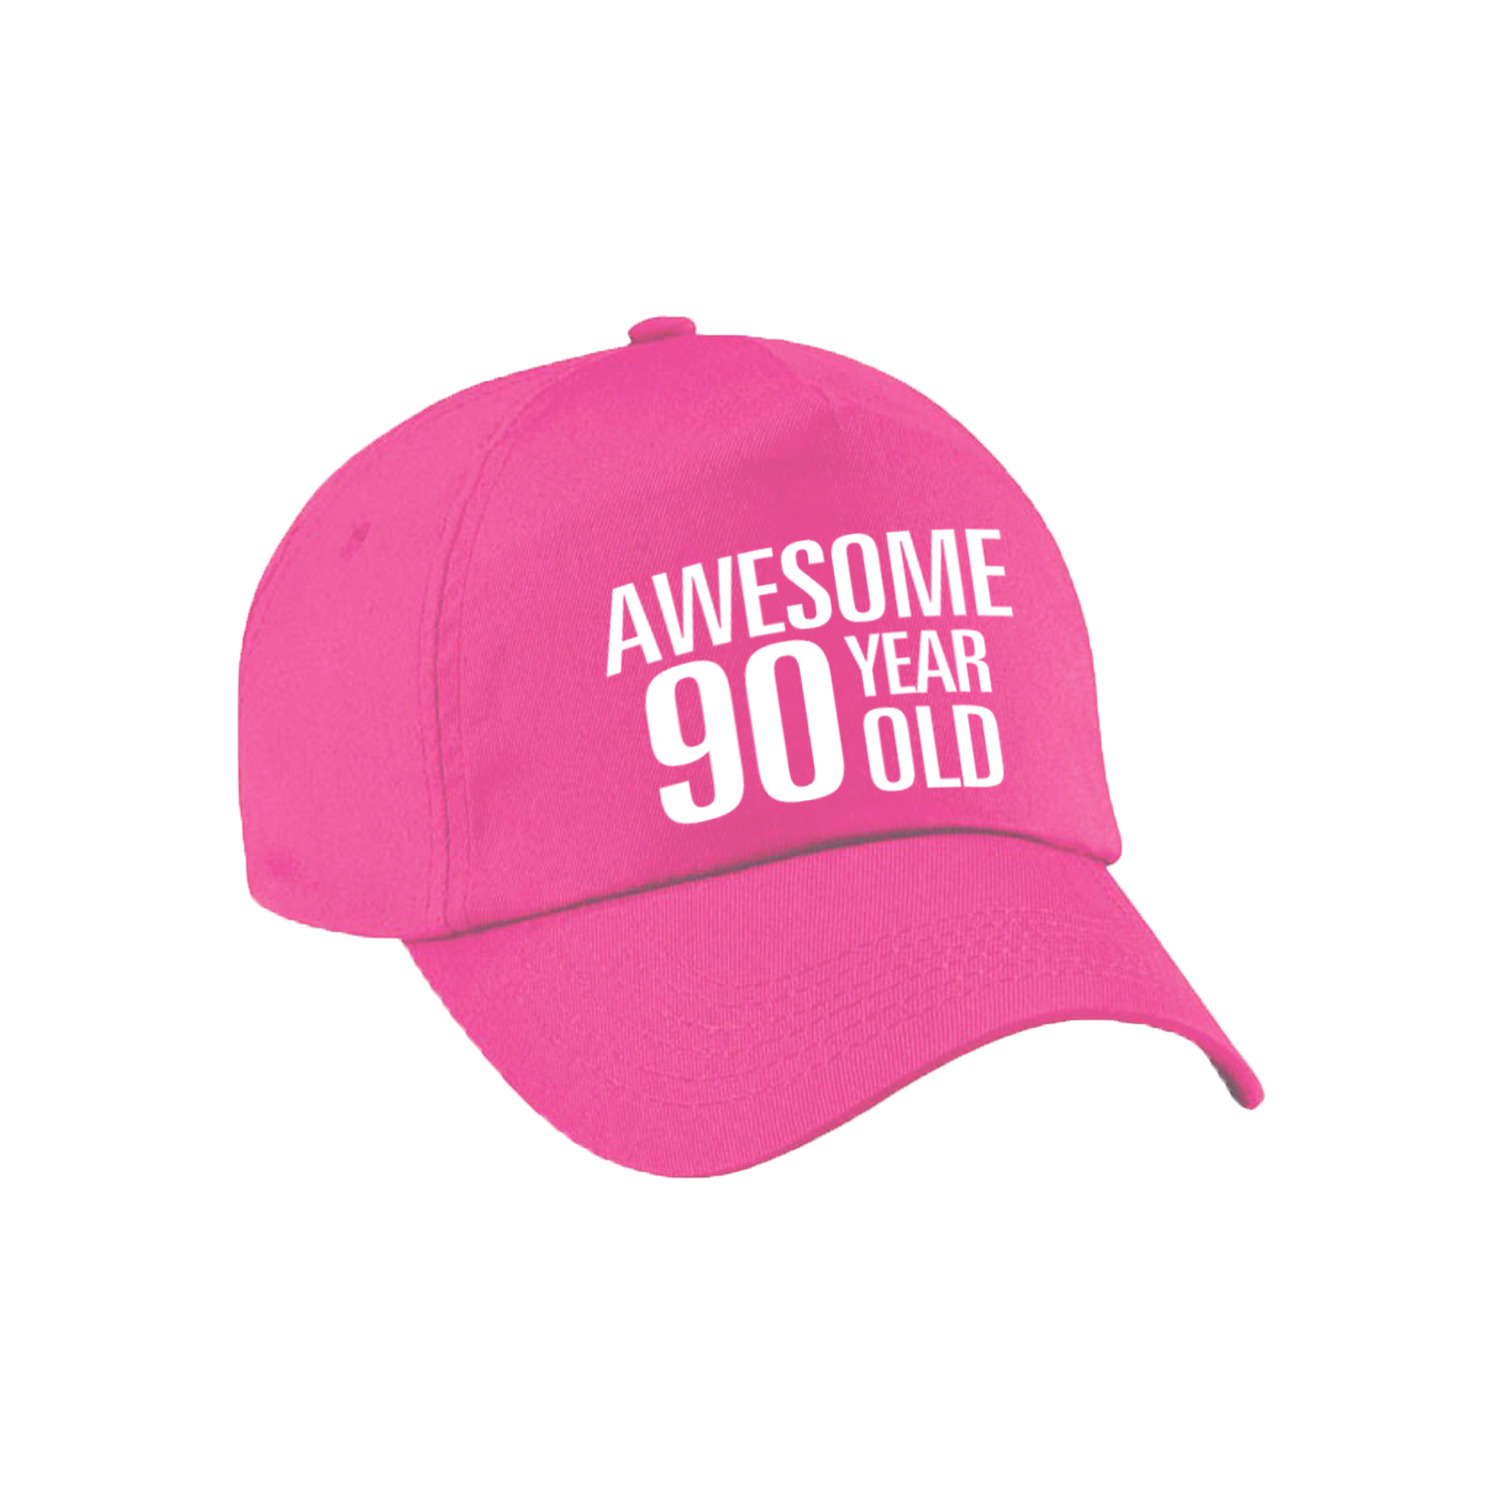 Awesome 90 year old verjaardag pet / cap roze voor dames